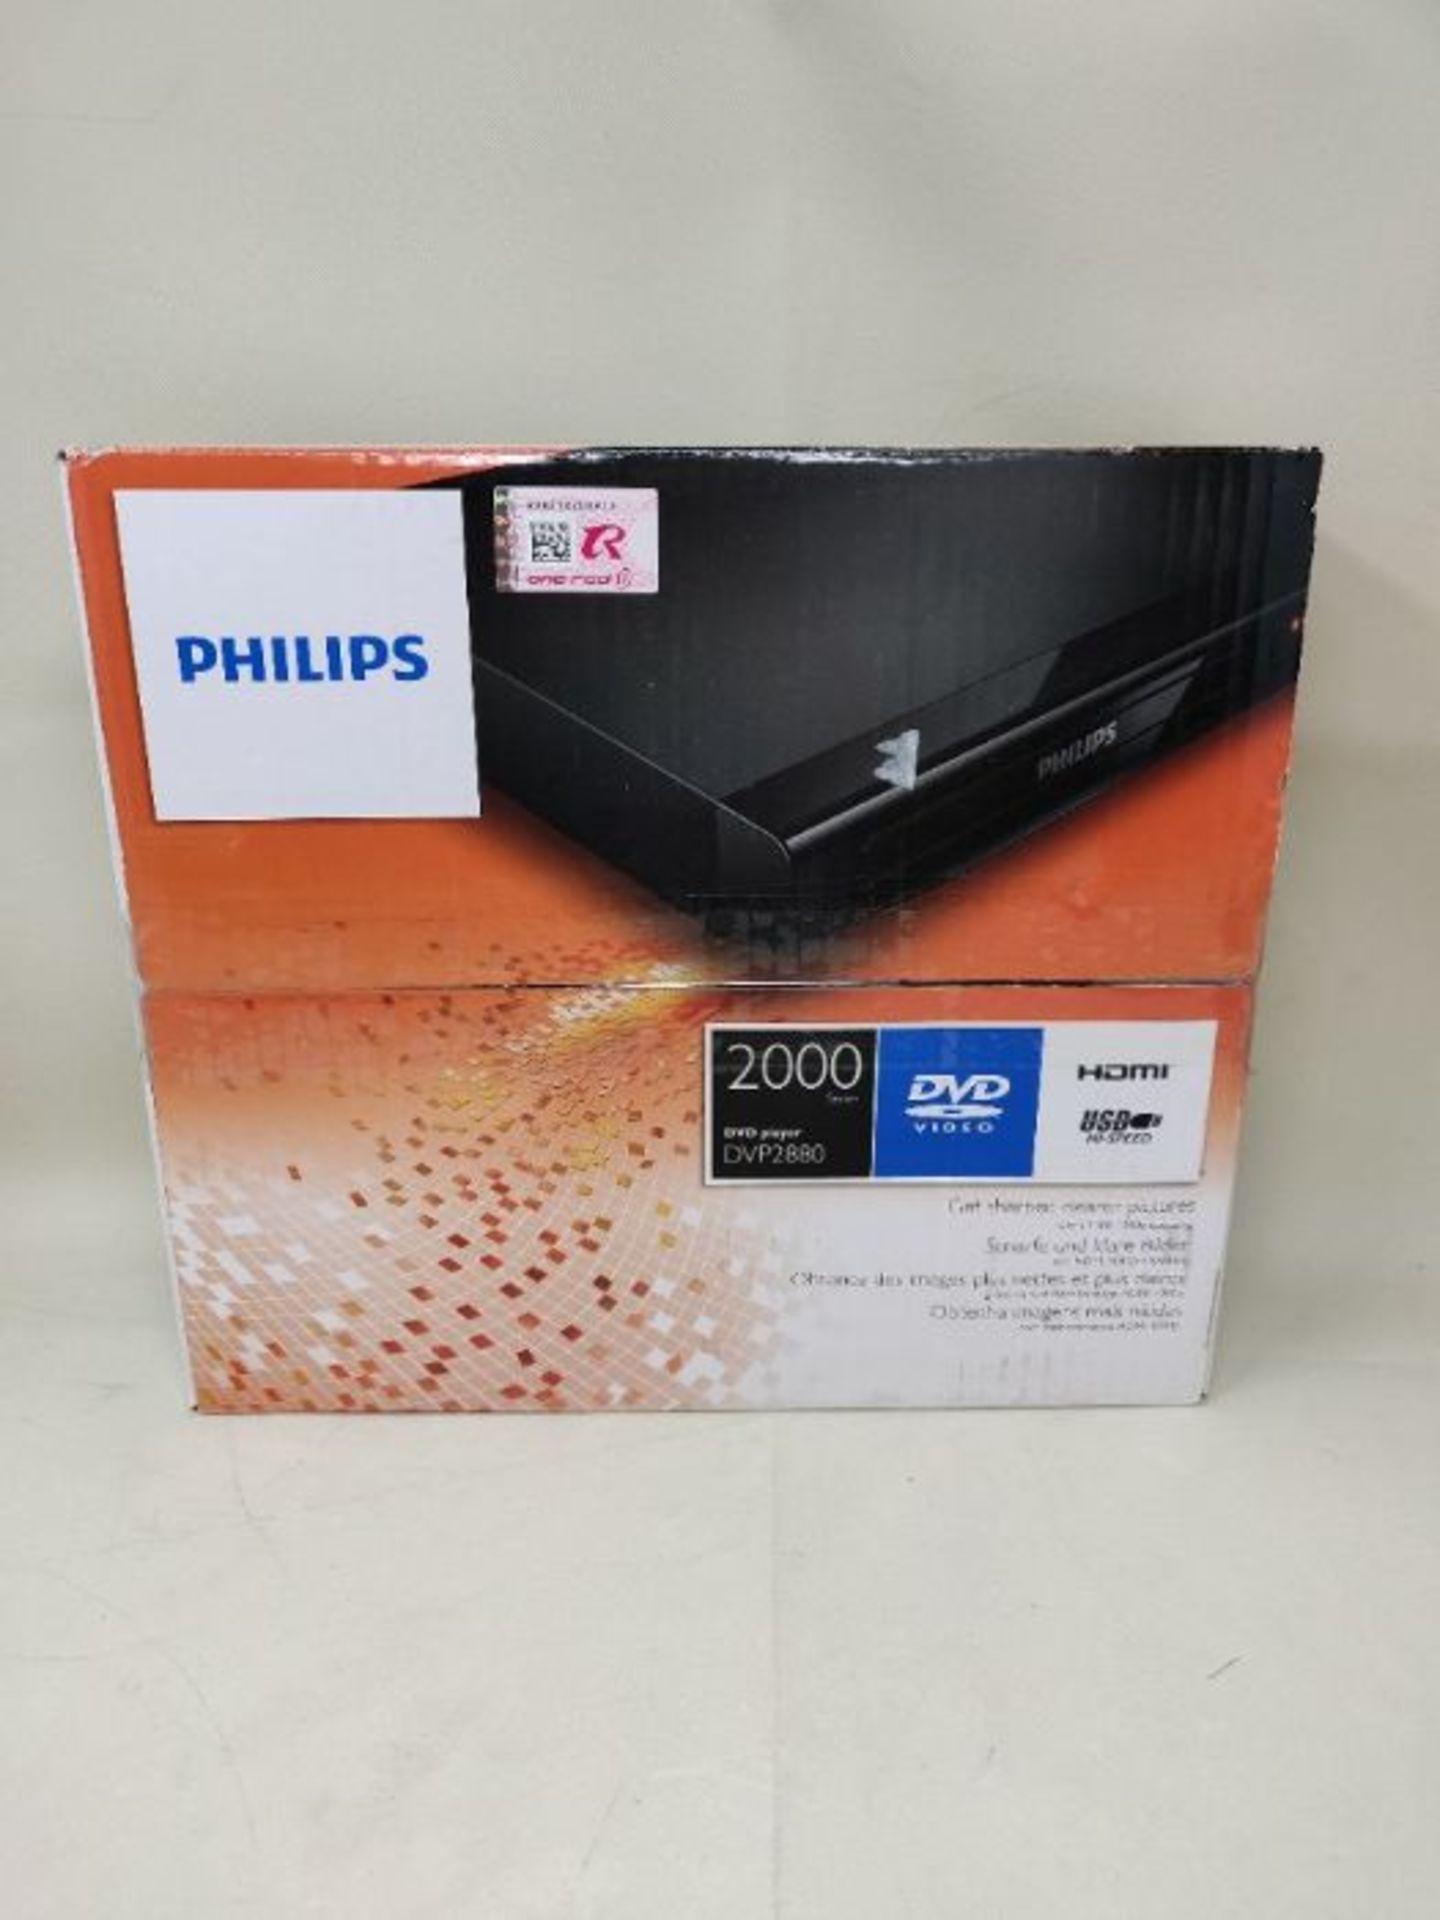 Philips DVD player DVP2880 HDMI 1080p USB 2.0 DivX Ultra CinemaPlus - Image 2 of 3